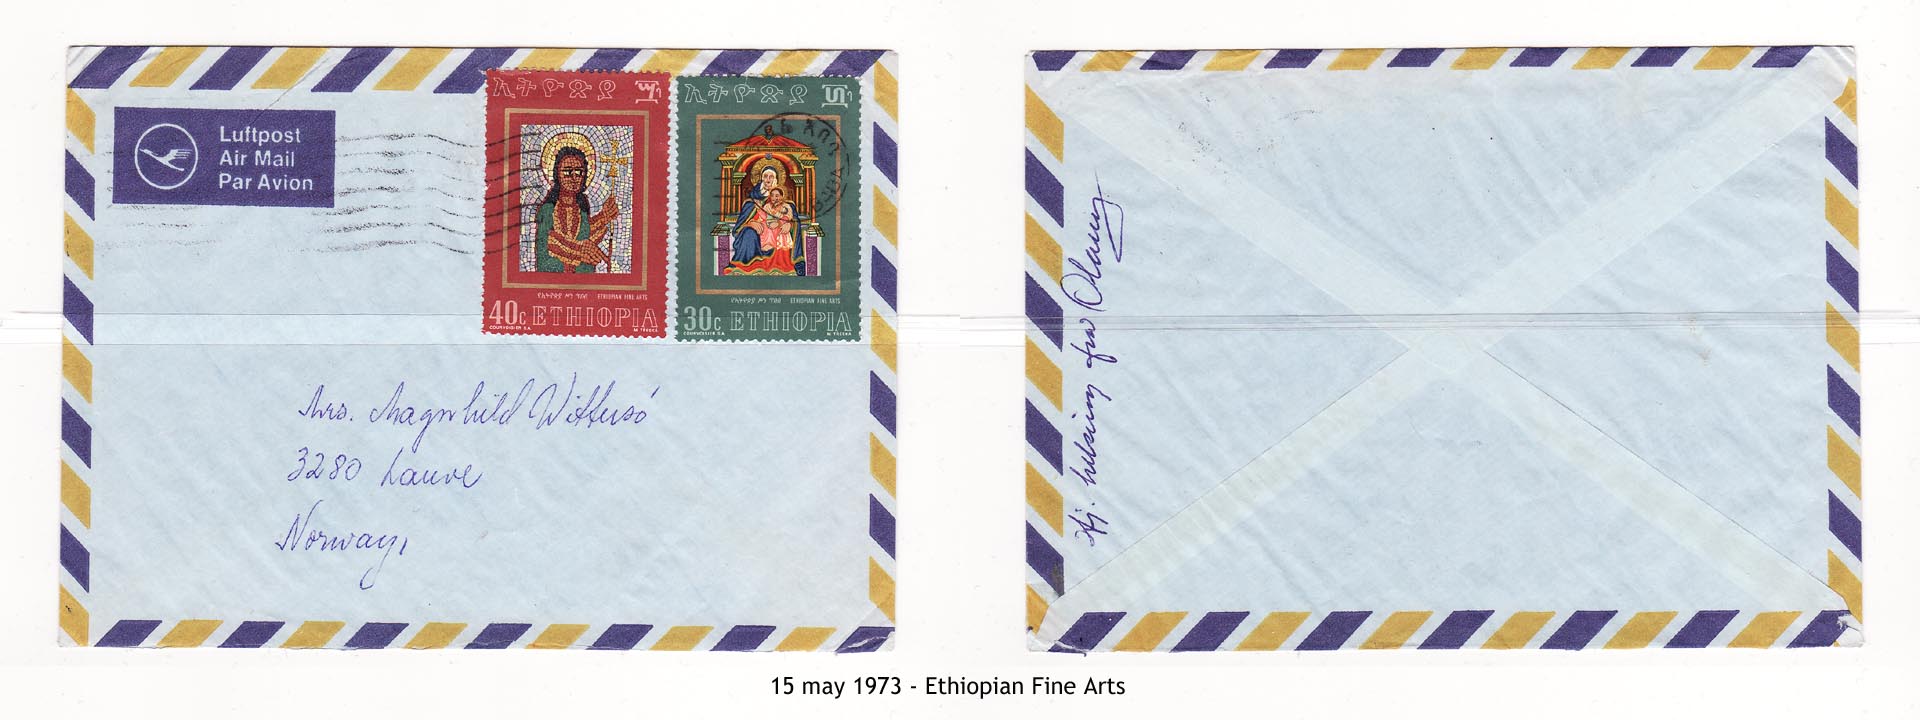 19730515 - Ethiopian Fine Arts